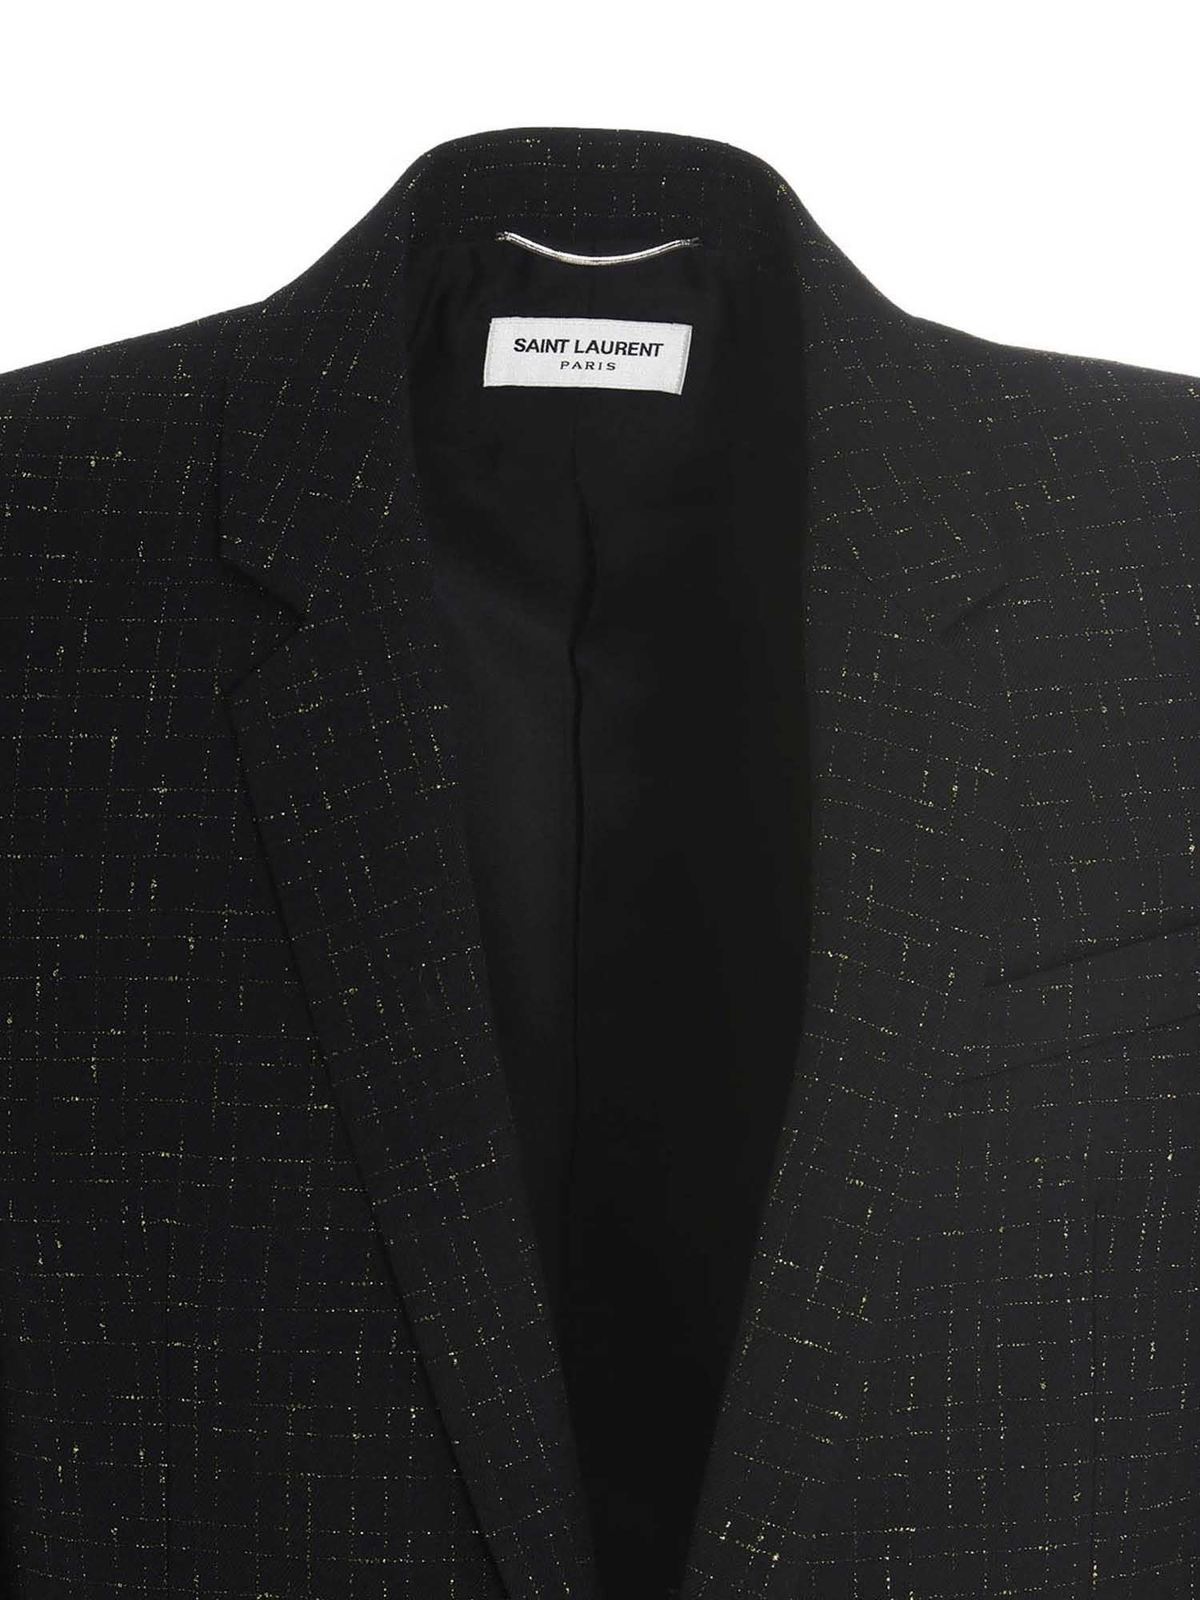 Blazers Saint Laurent - Serge blazer in black lamé - 630749Y1B081055